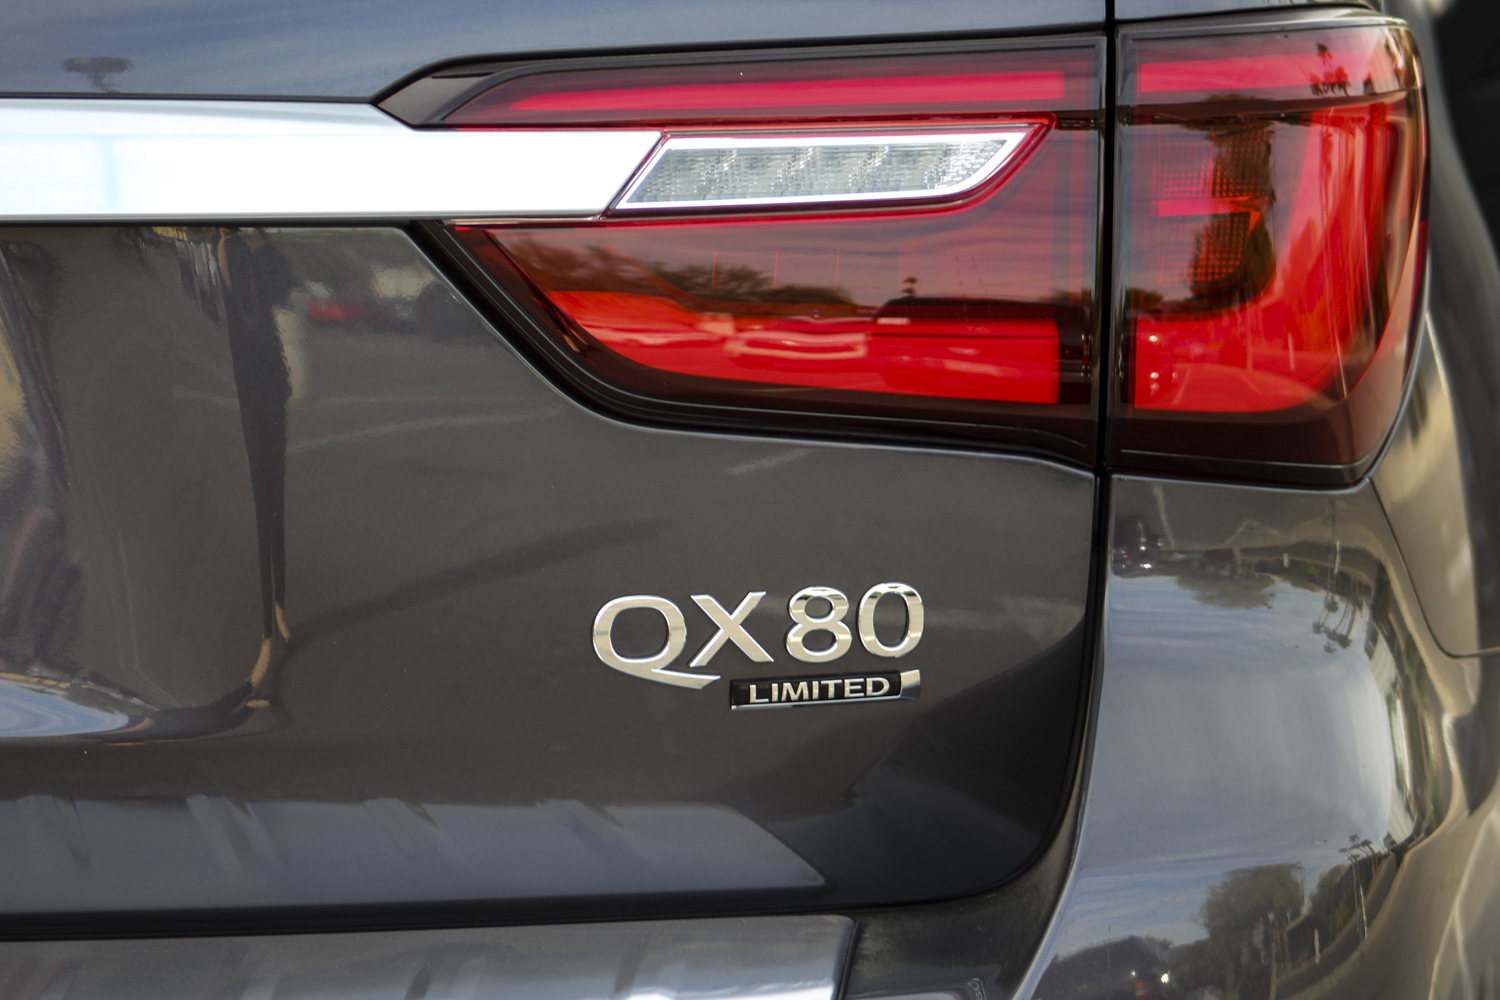 revision qx80 infiniti modelo 2019 1